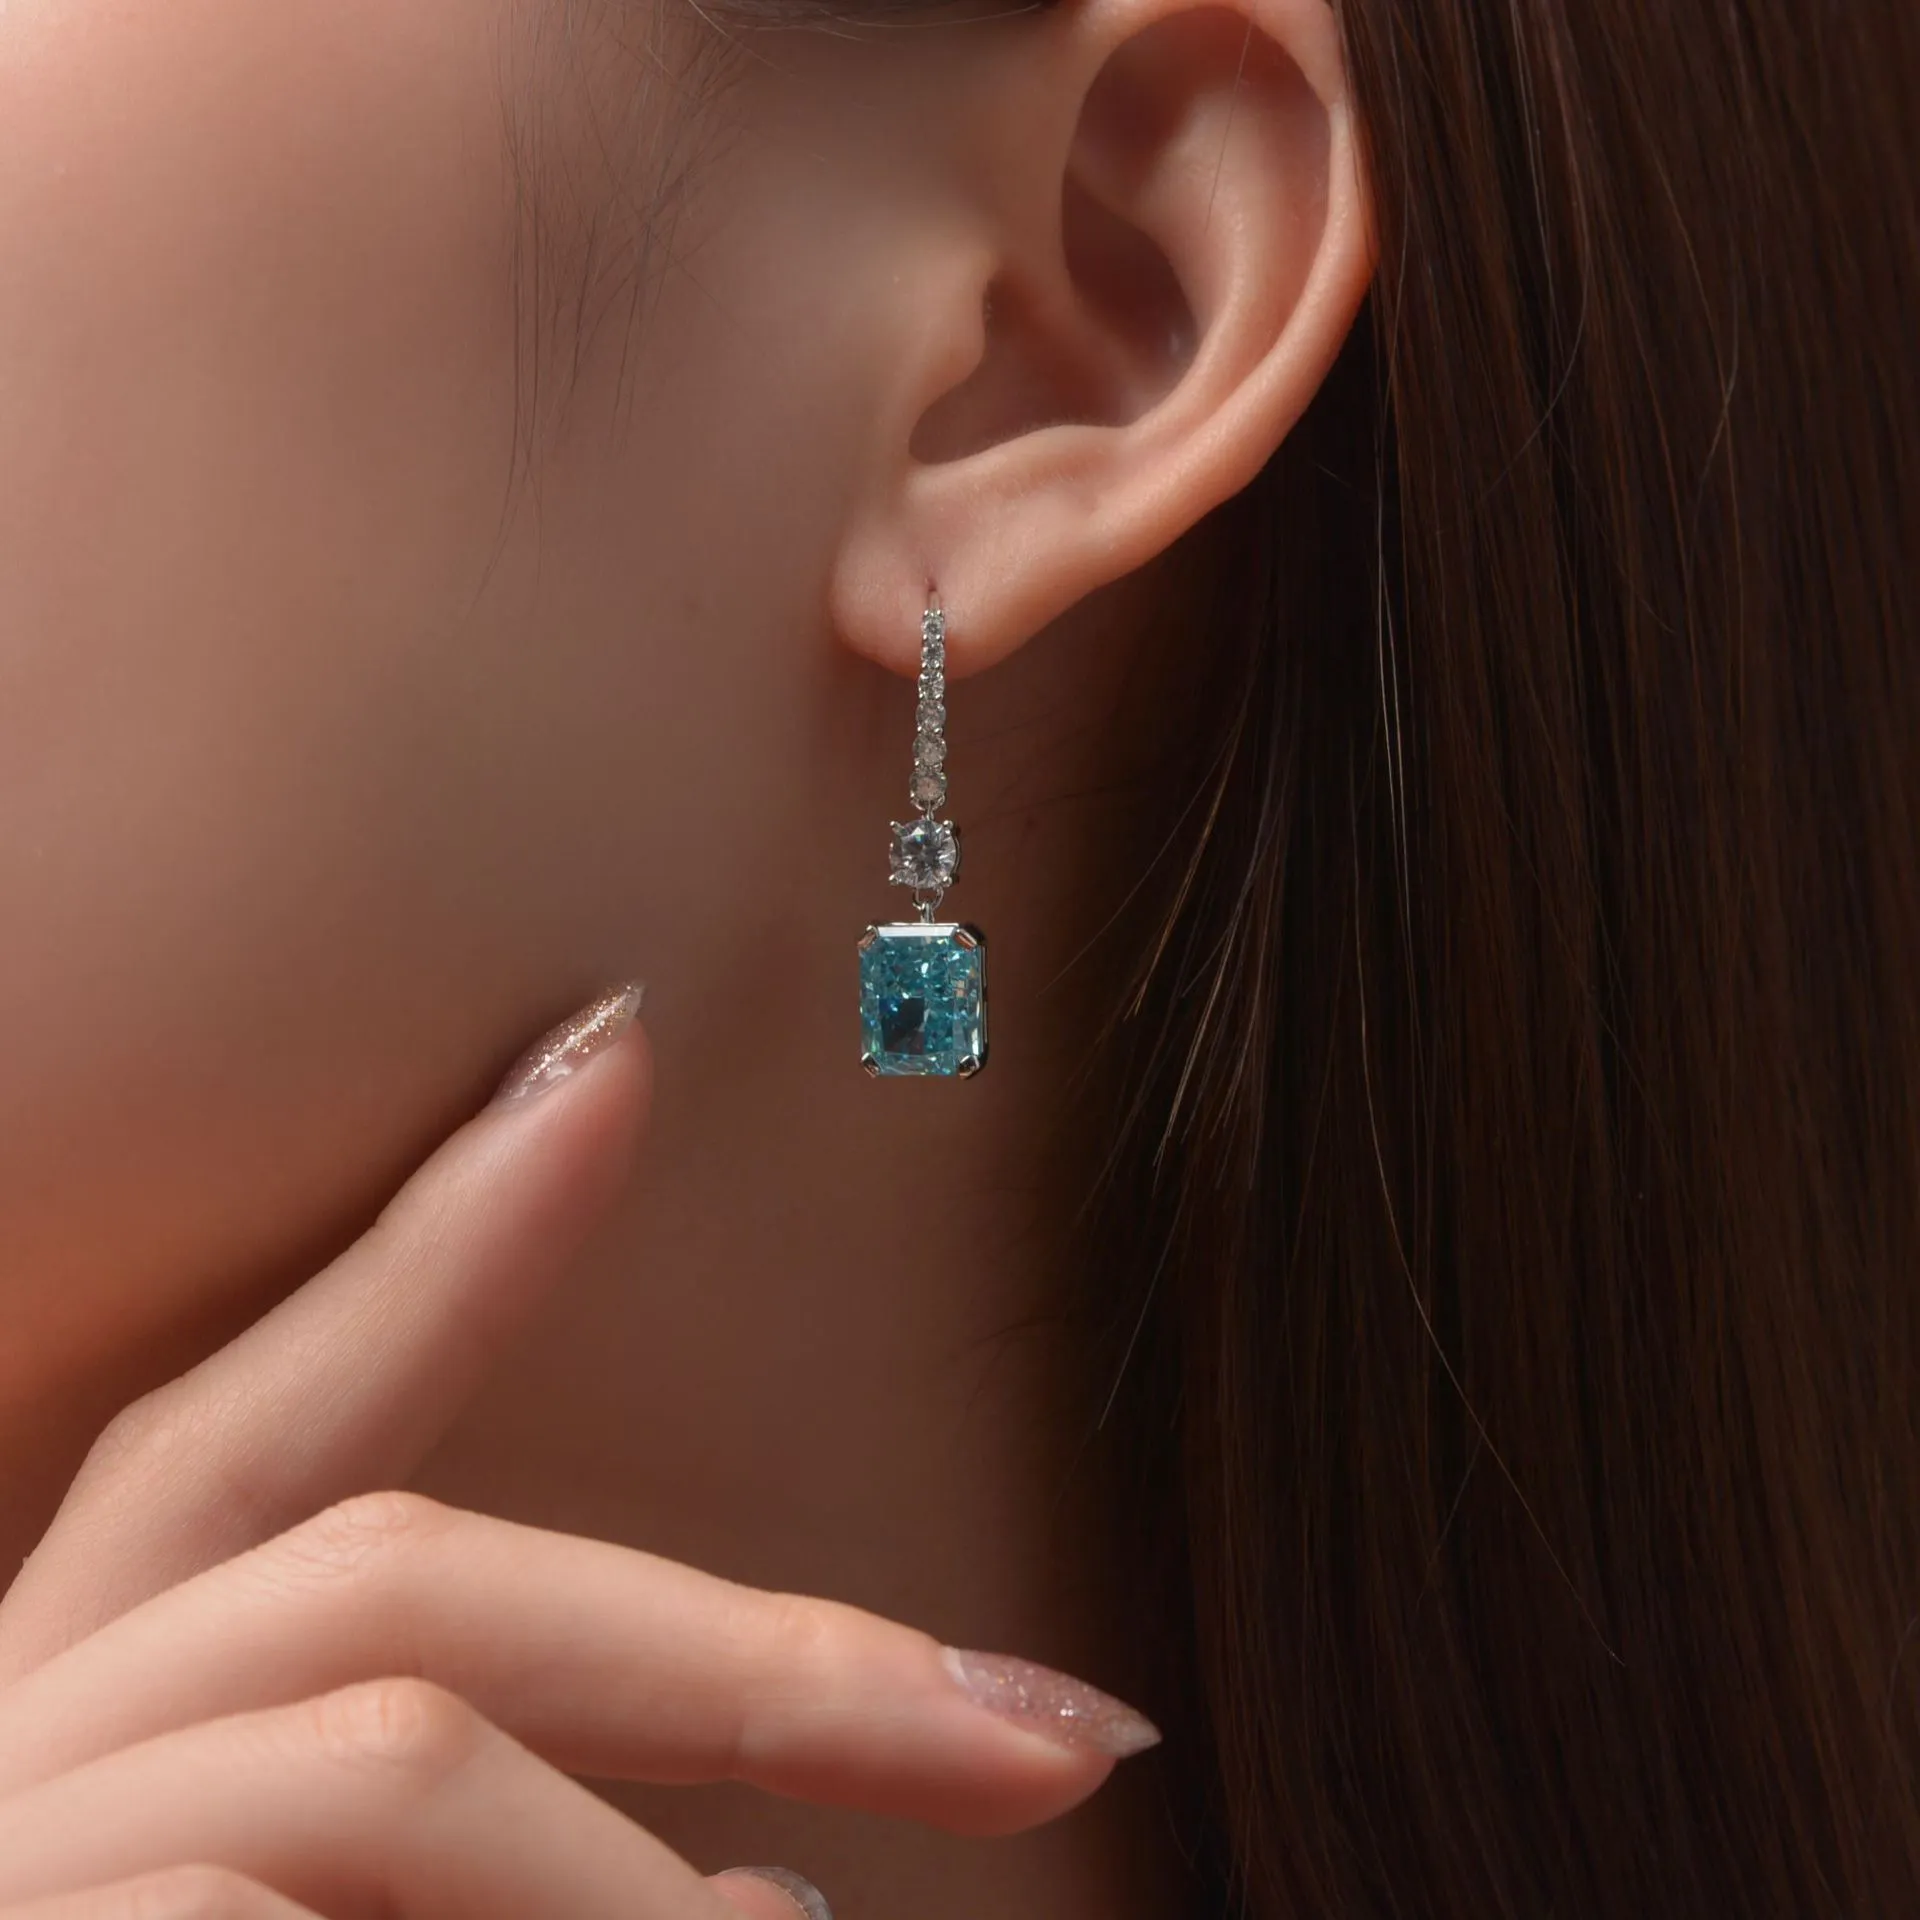 Details more than 271 aquamarine wedding earrings best